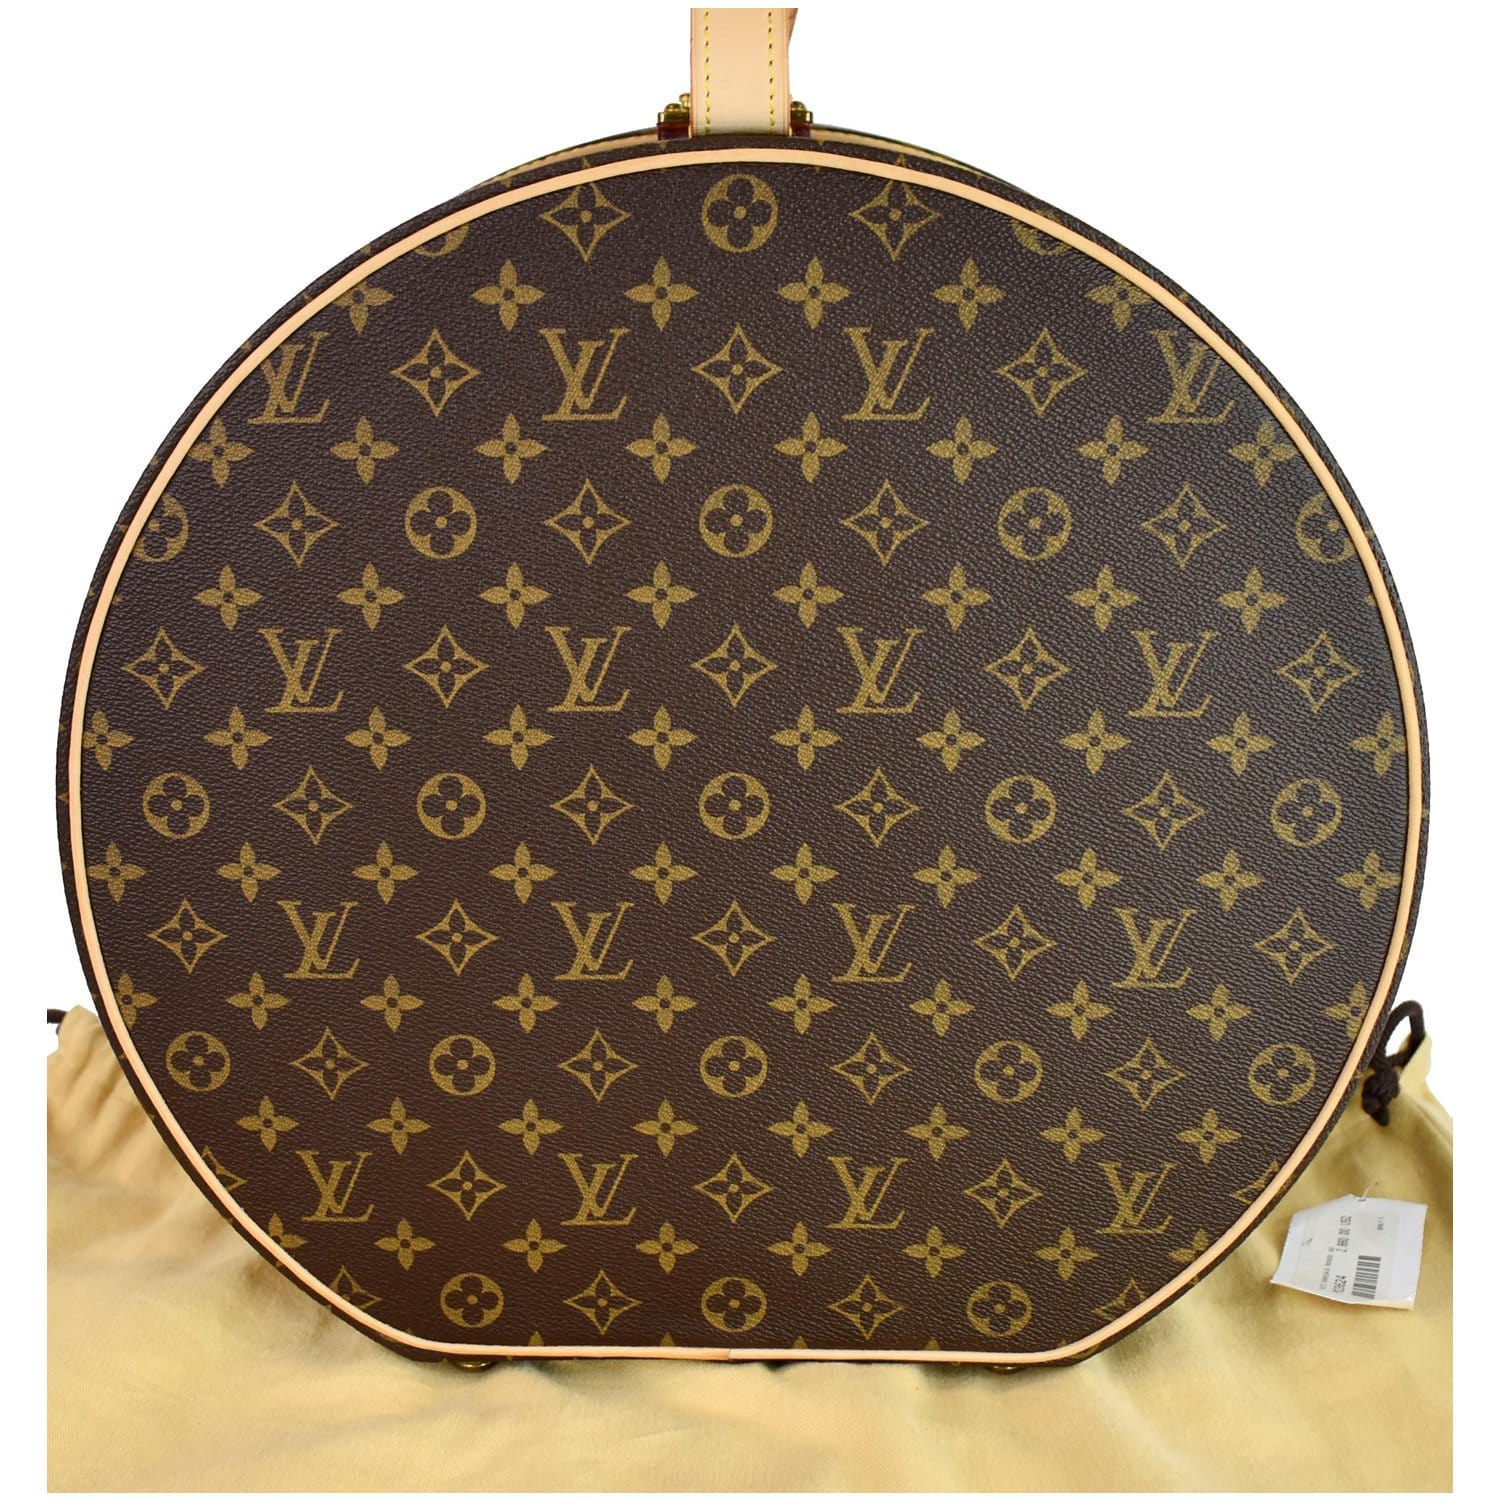 Louis Vuitton, Other, Louis Vuitton Box And Bag